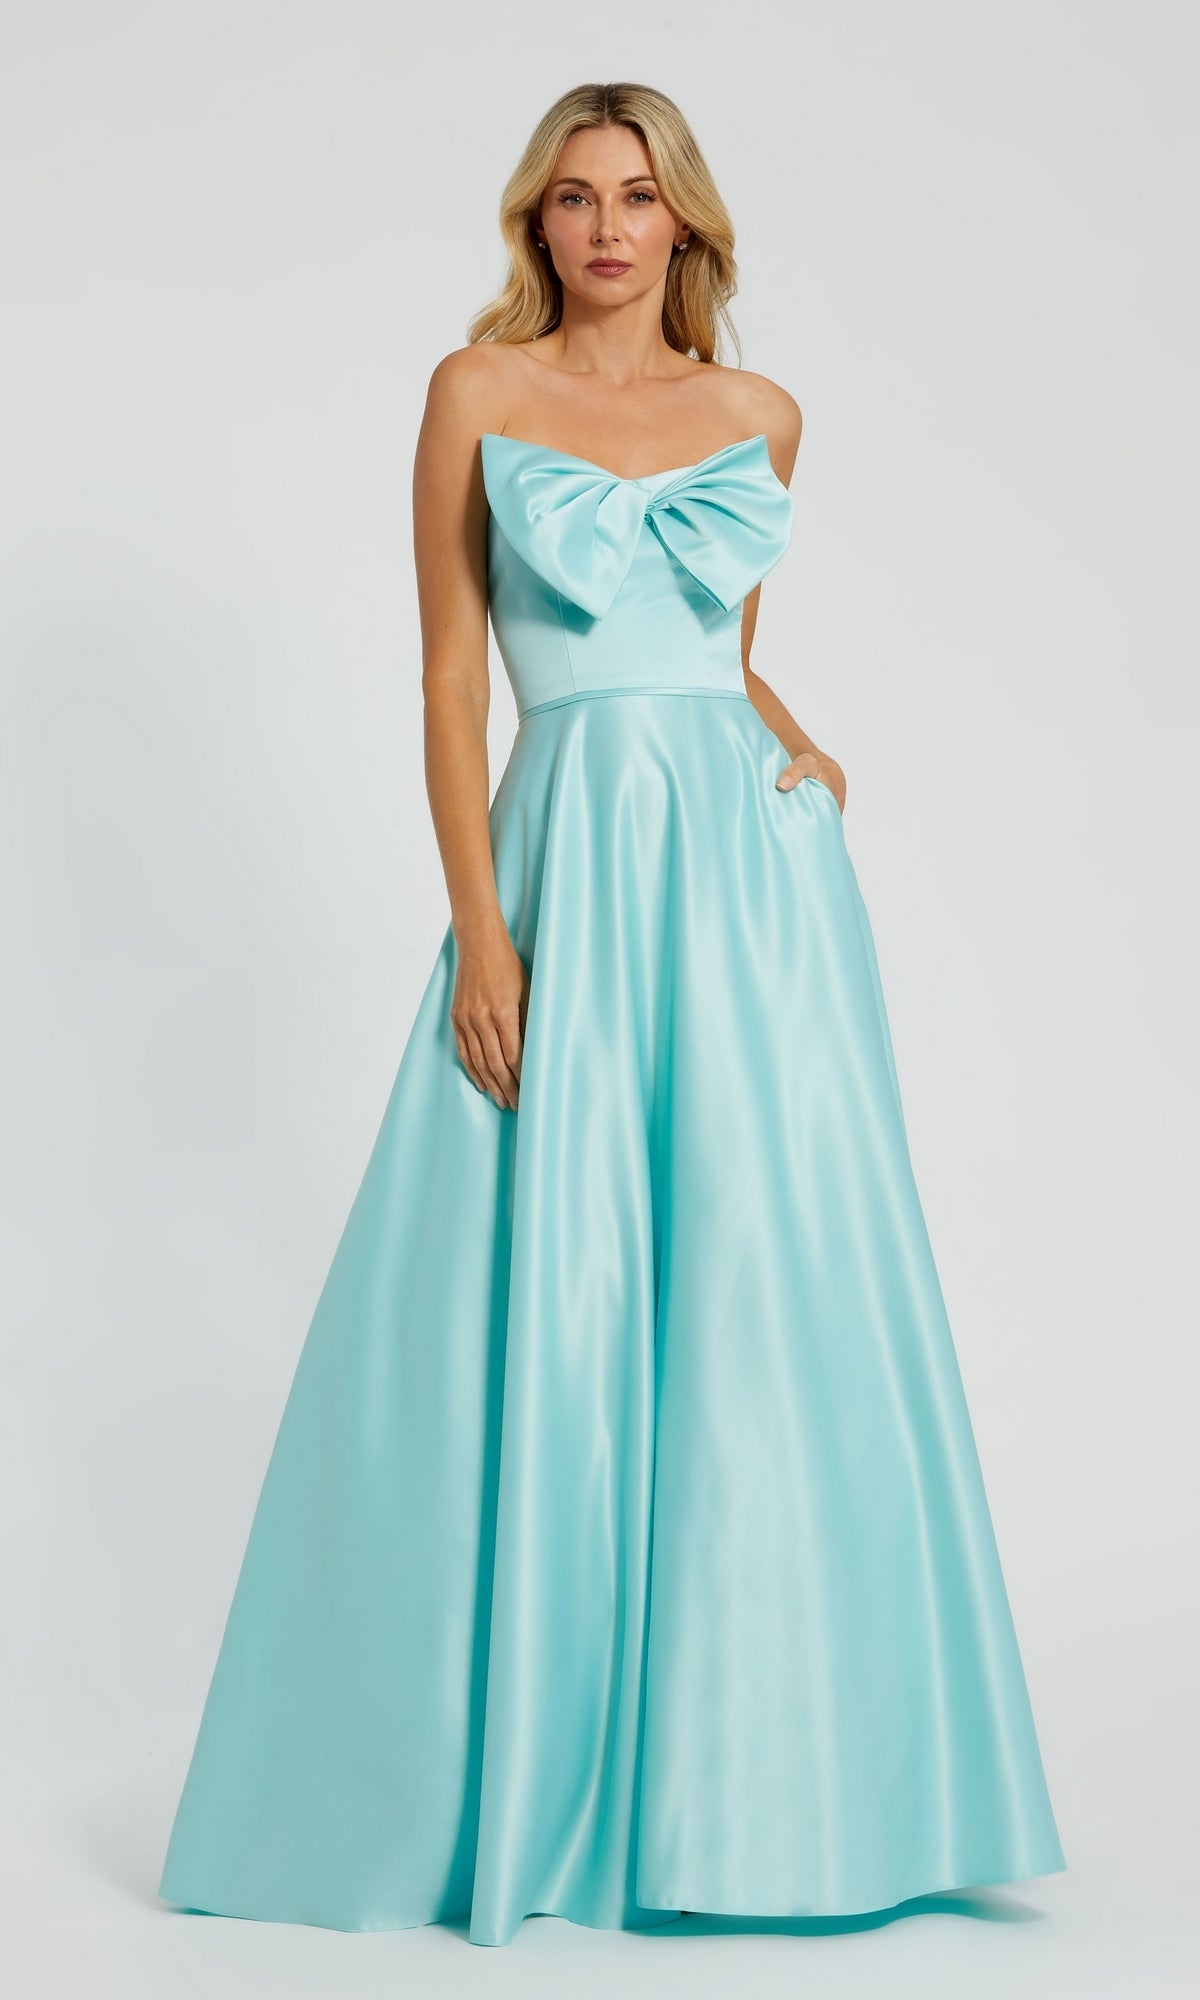 Long Formal Dress 49702 by Mac Duggal